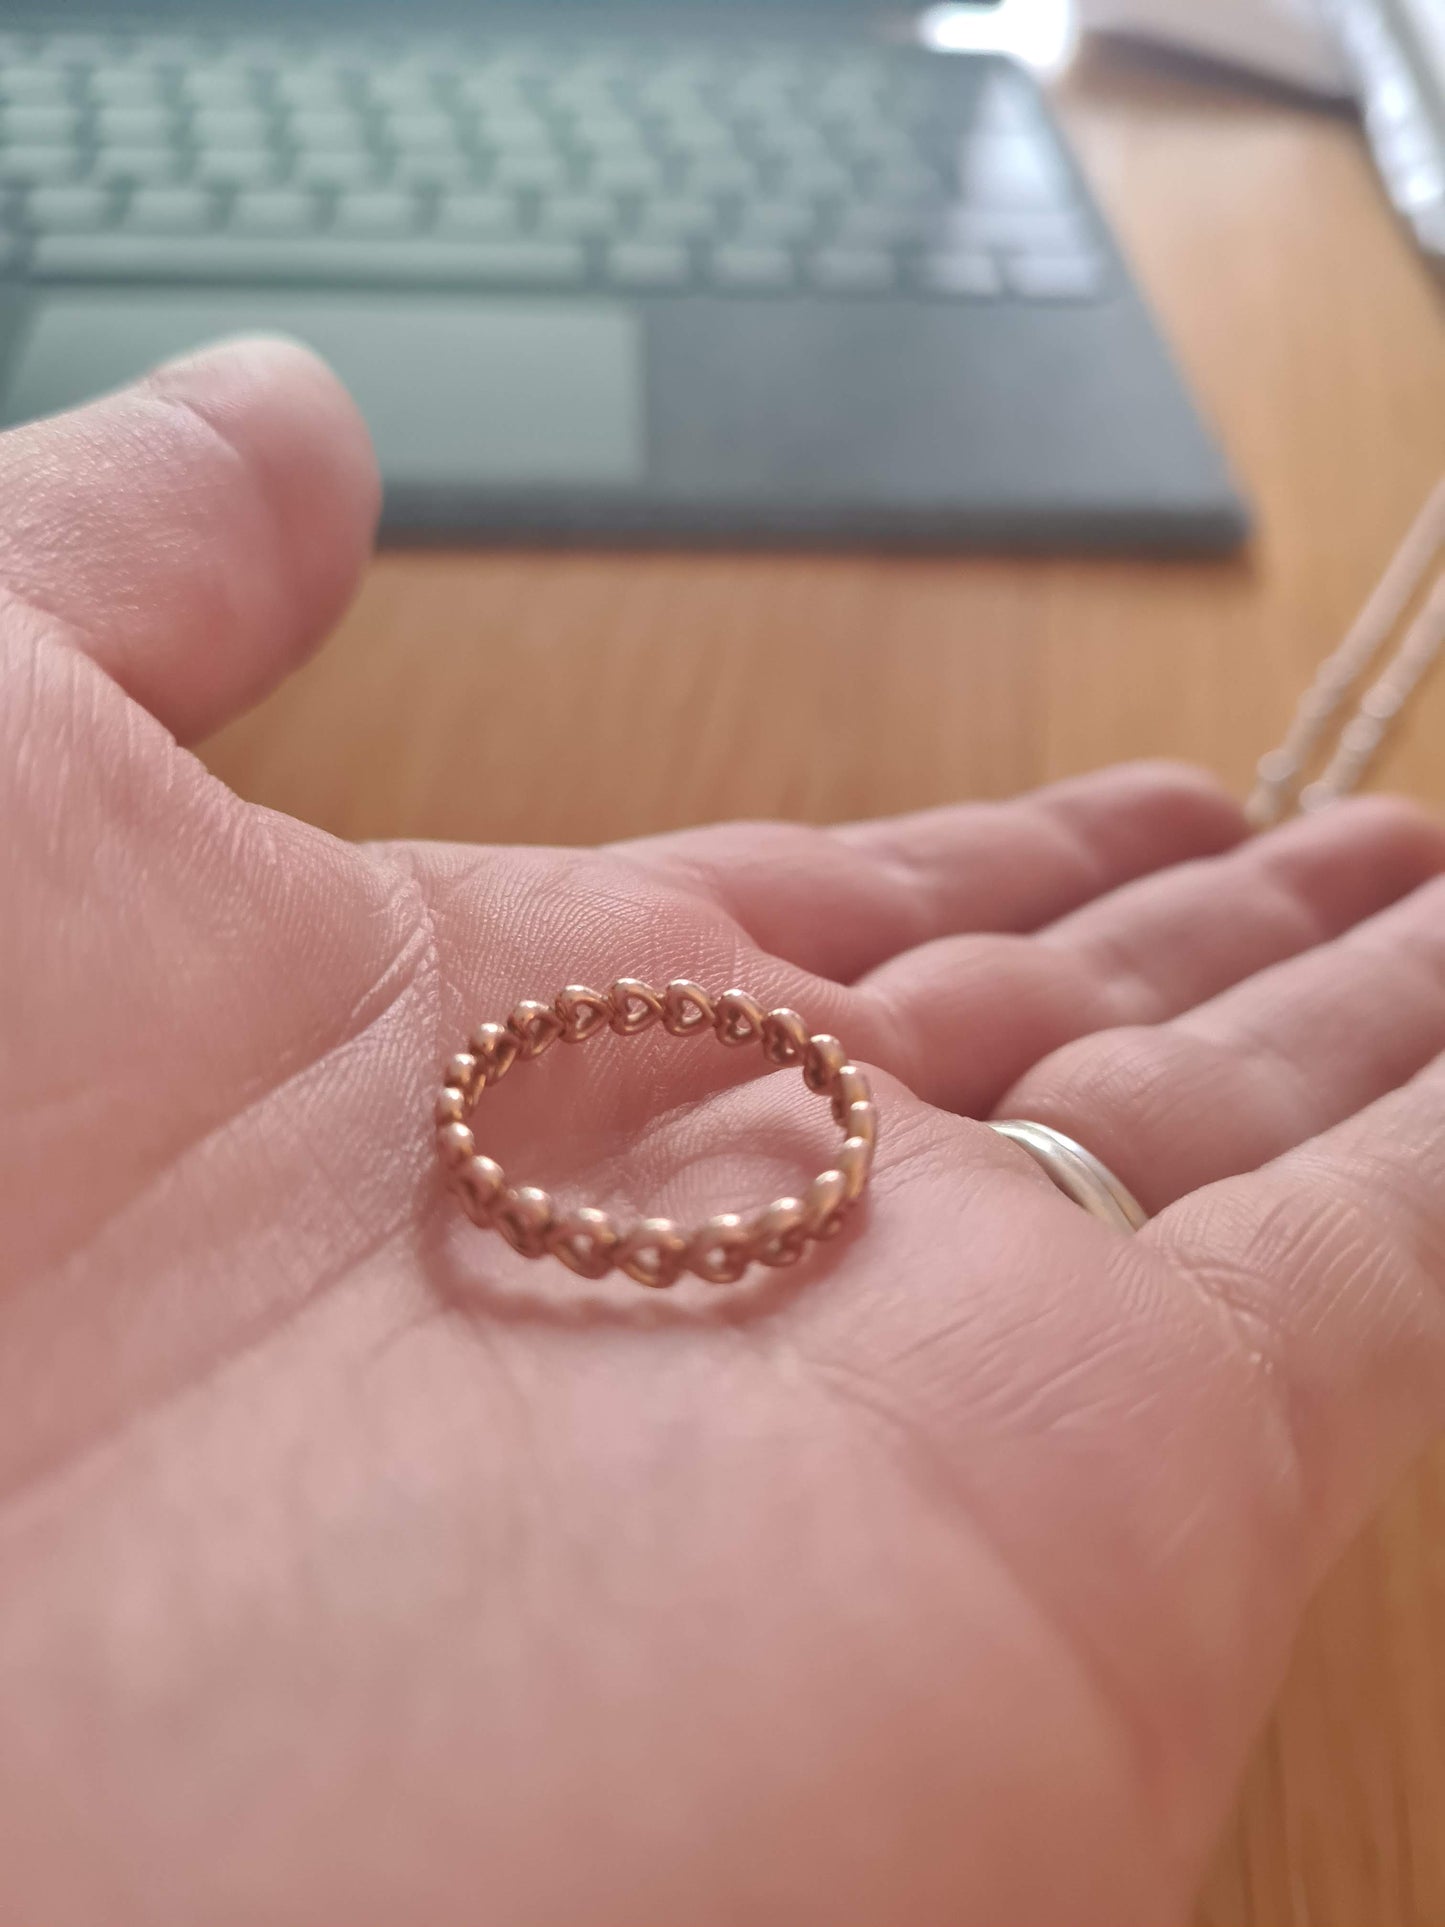 Genuine Pandora Rose Gold Openwork Ring in Size 58